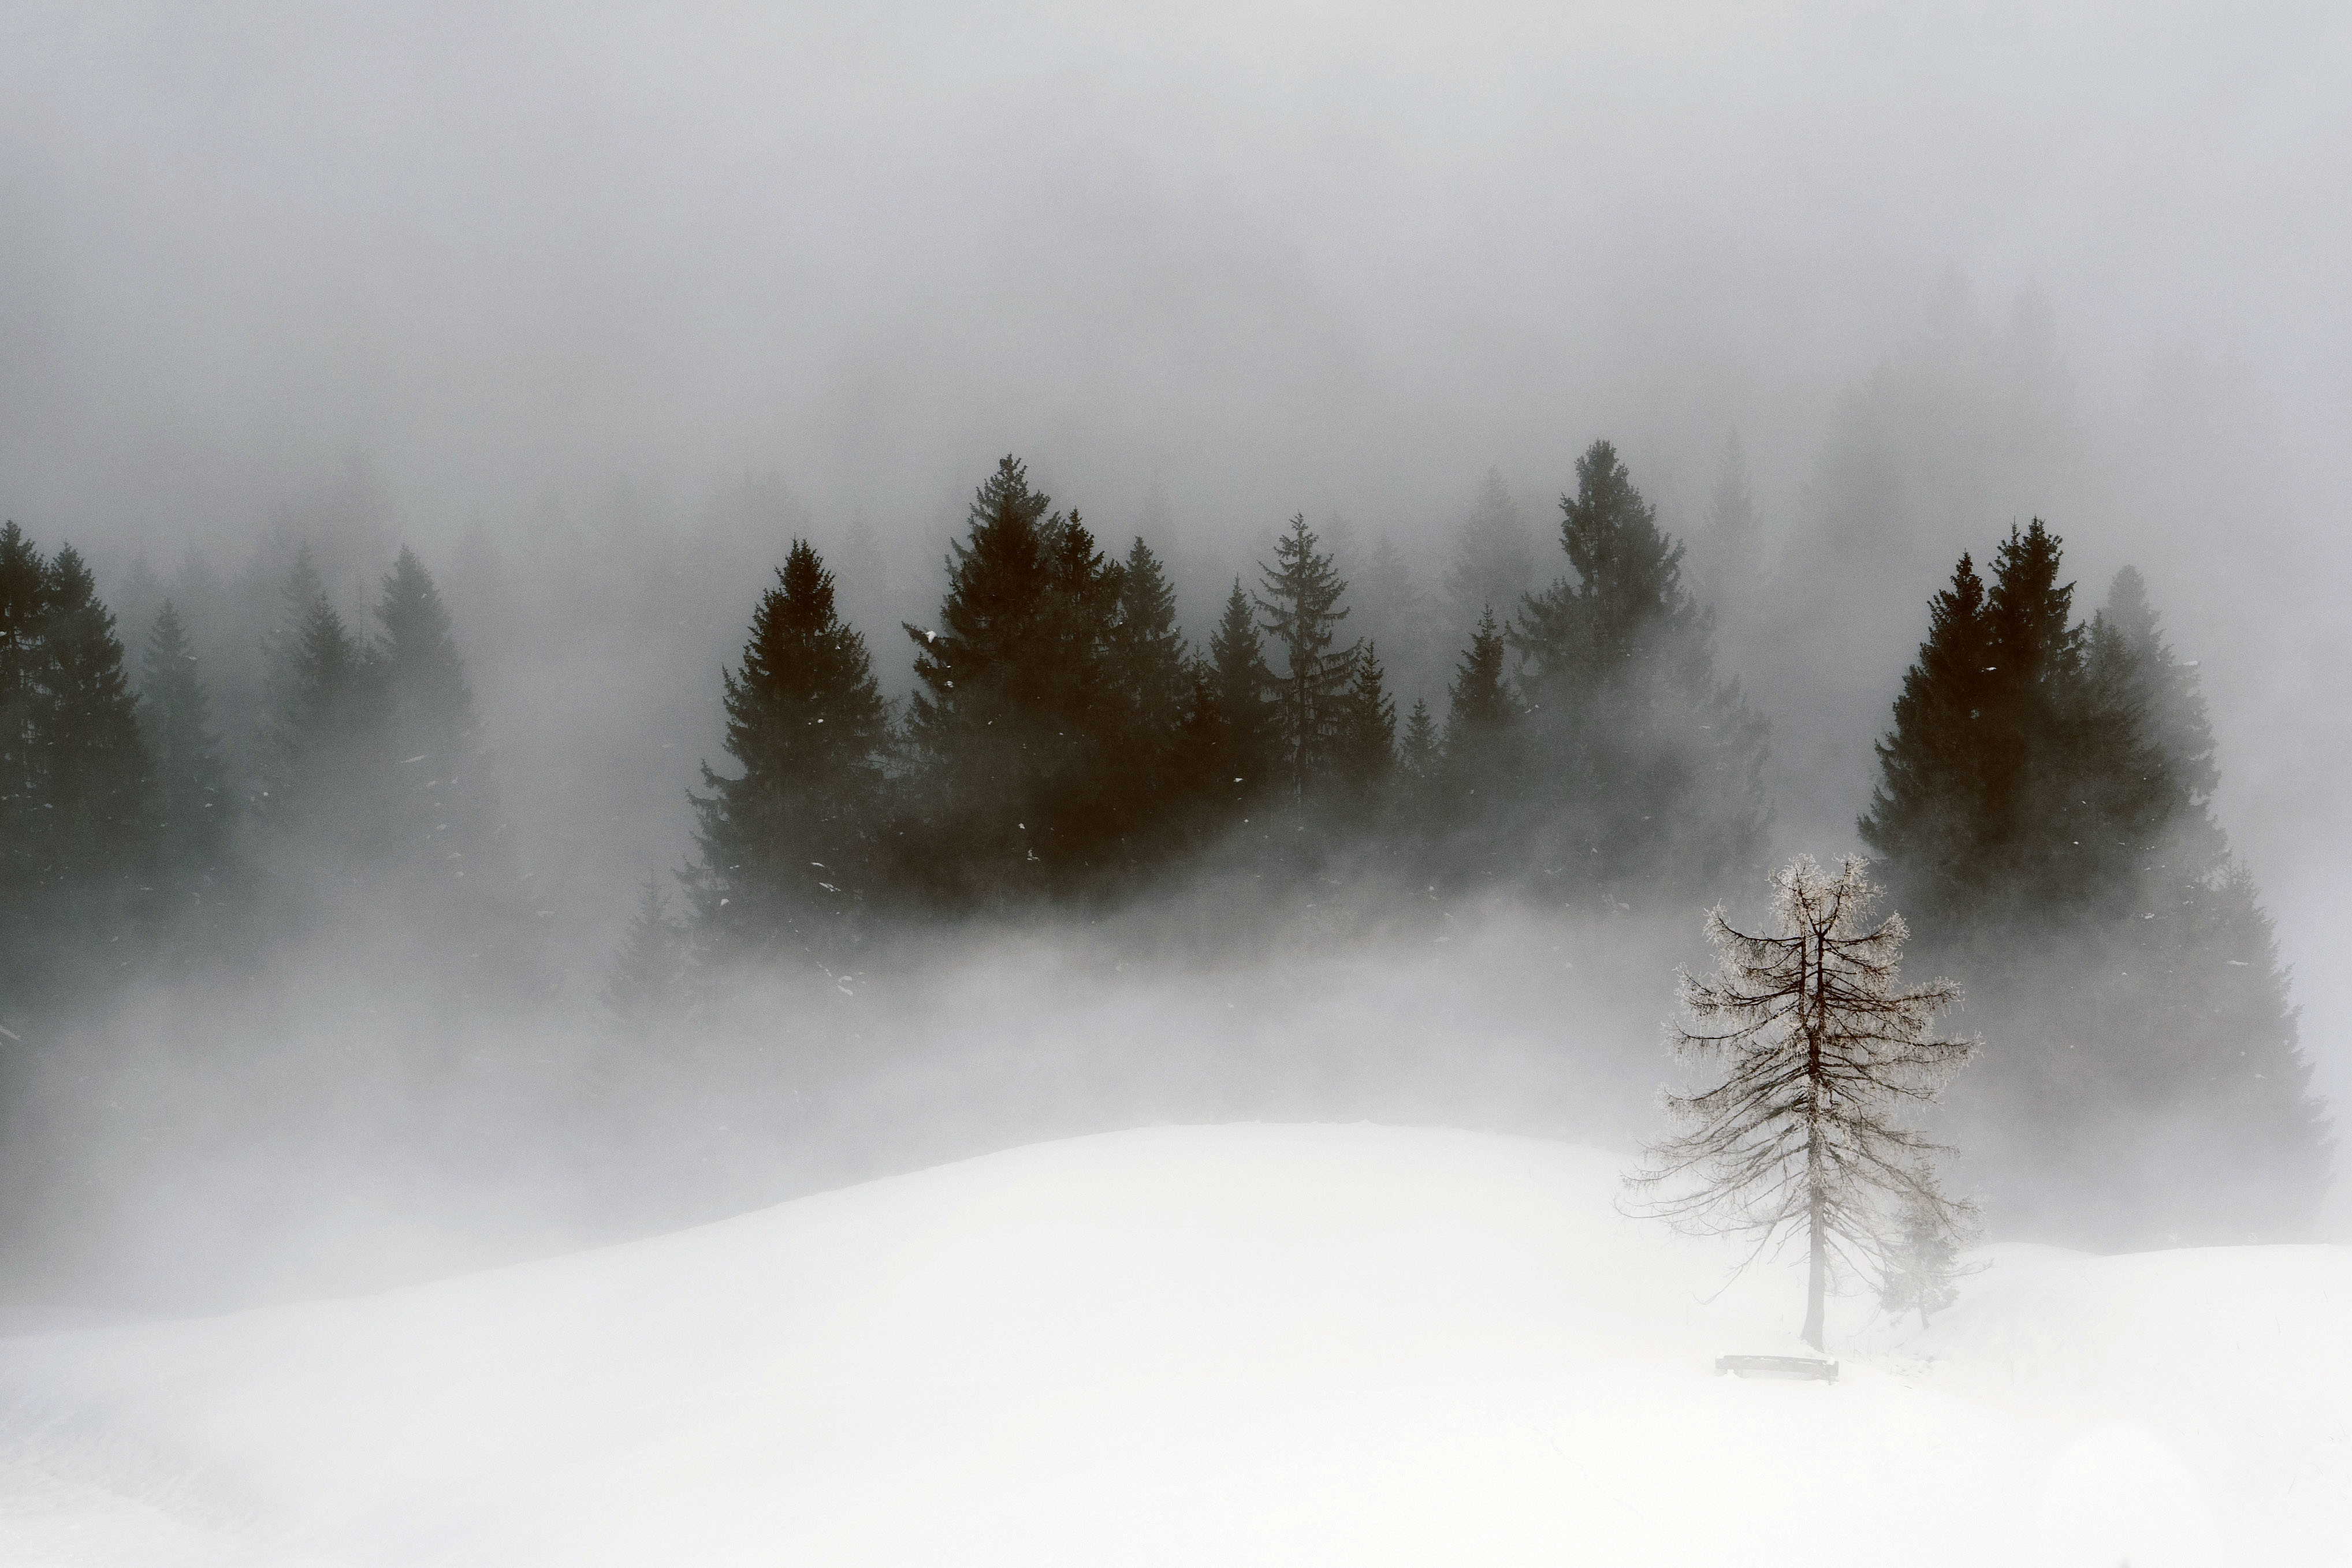 Mist Snow Cold Landscape Pine Trees White Film Filter 4072x2715